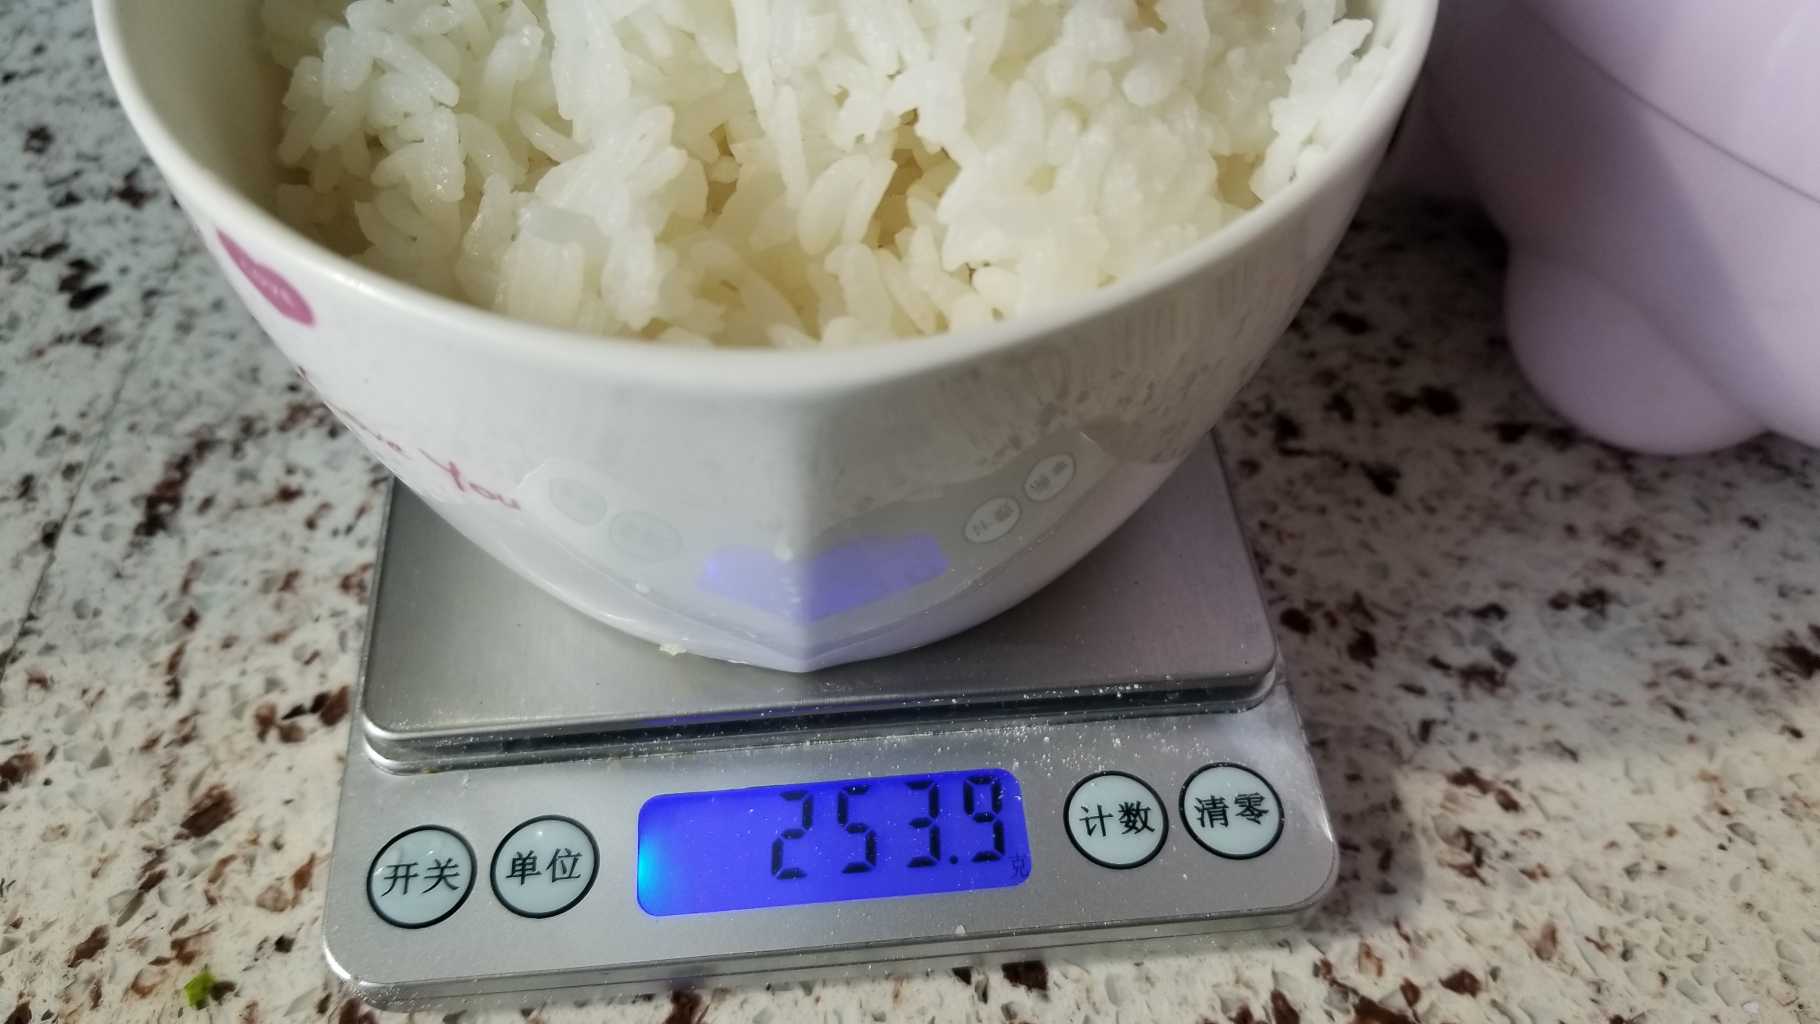 100g煮熟的米饭到底有多少？ - 知乎